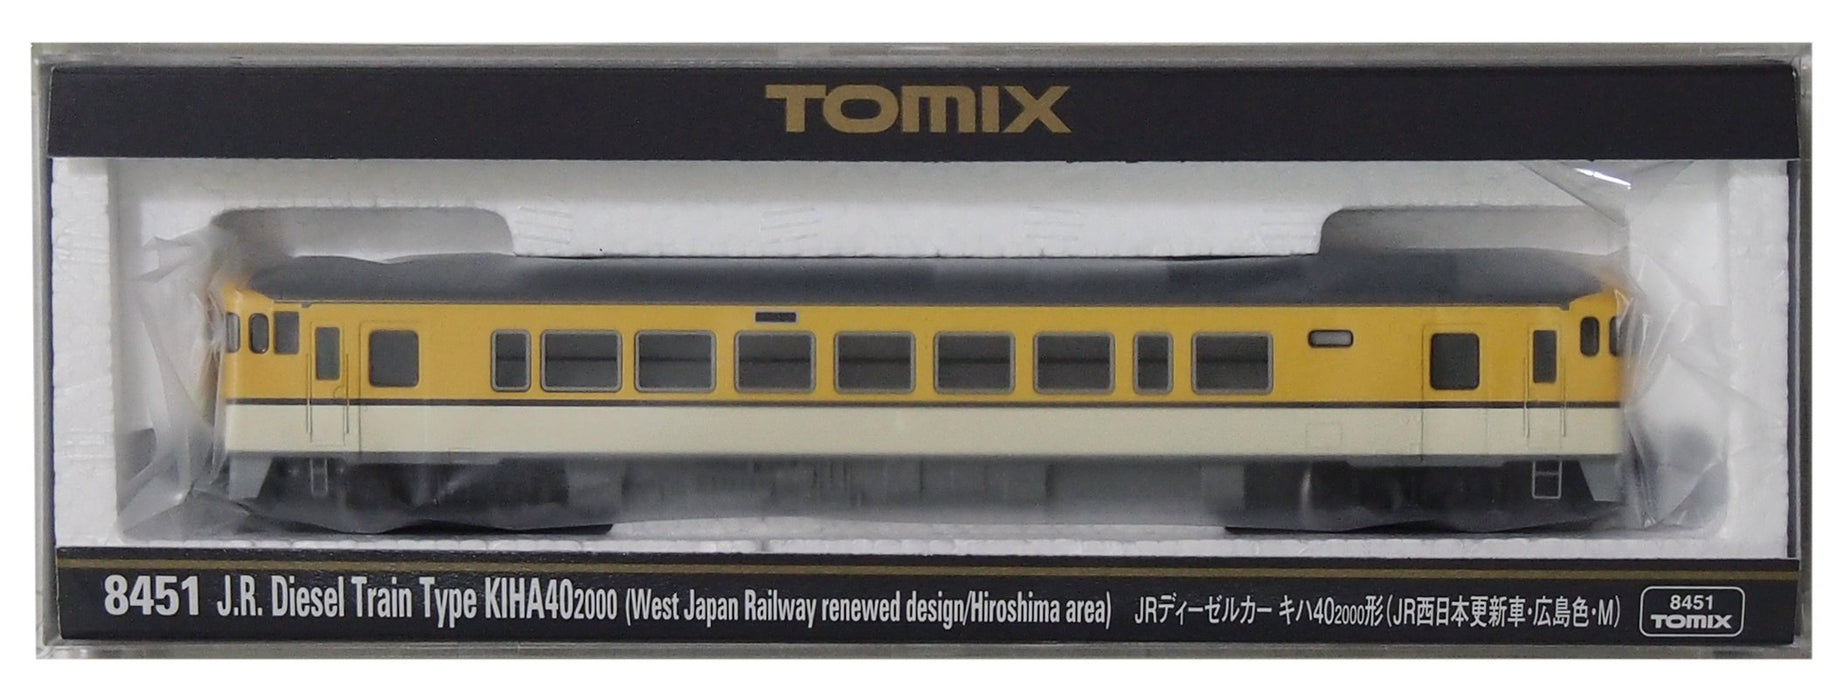 Tomytec Tomix N Spur Kiha 40–2000 aktualisiert JR West Japan Hiroshima Farbe M 8451 Diesel-Eisenbahnmodell